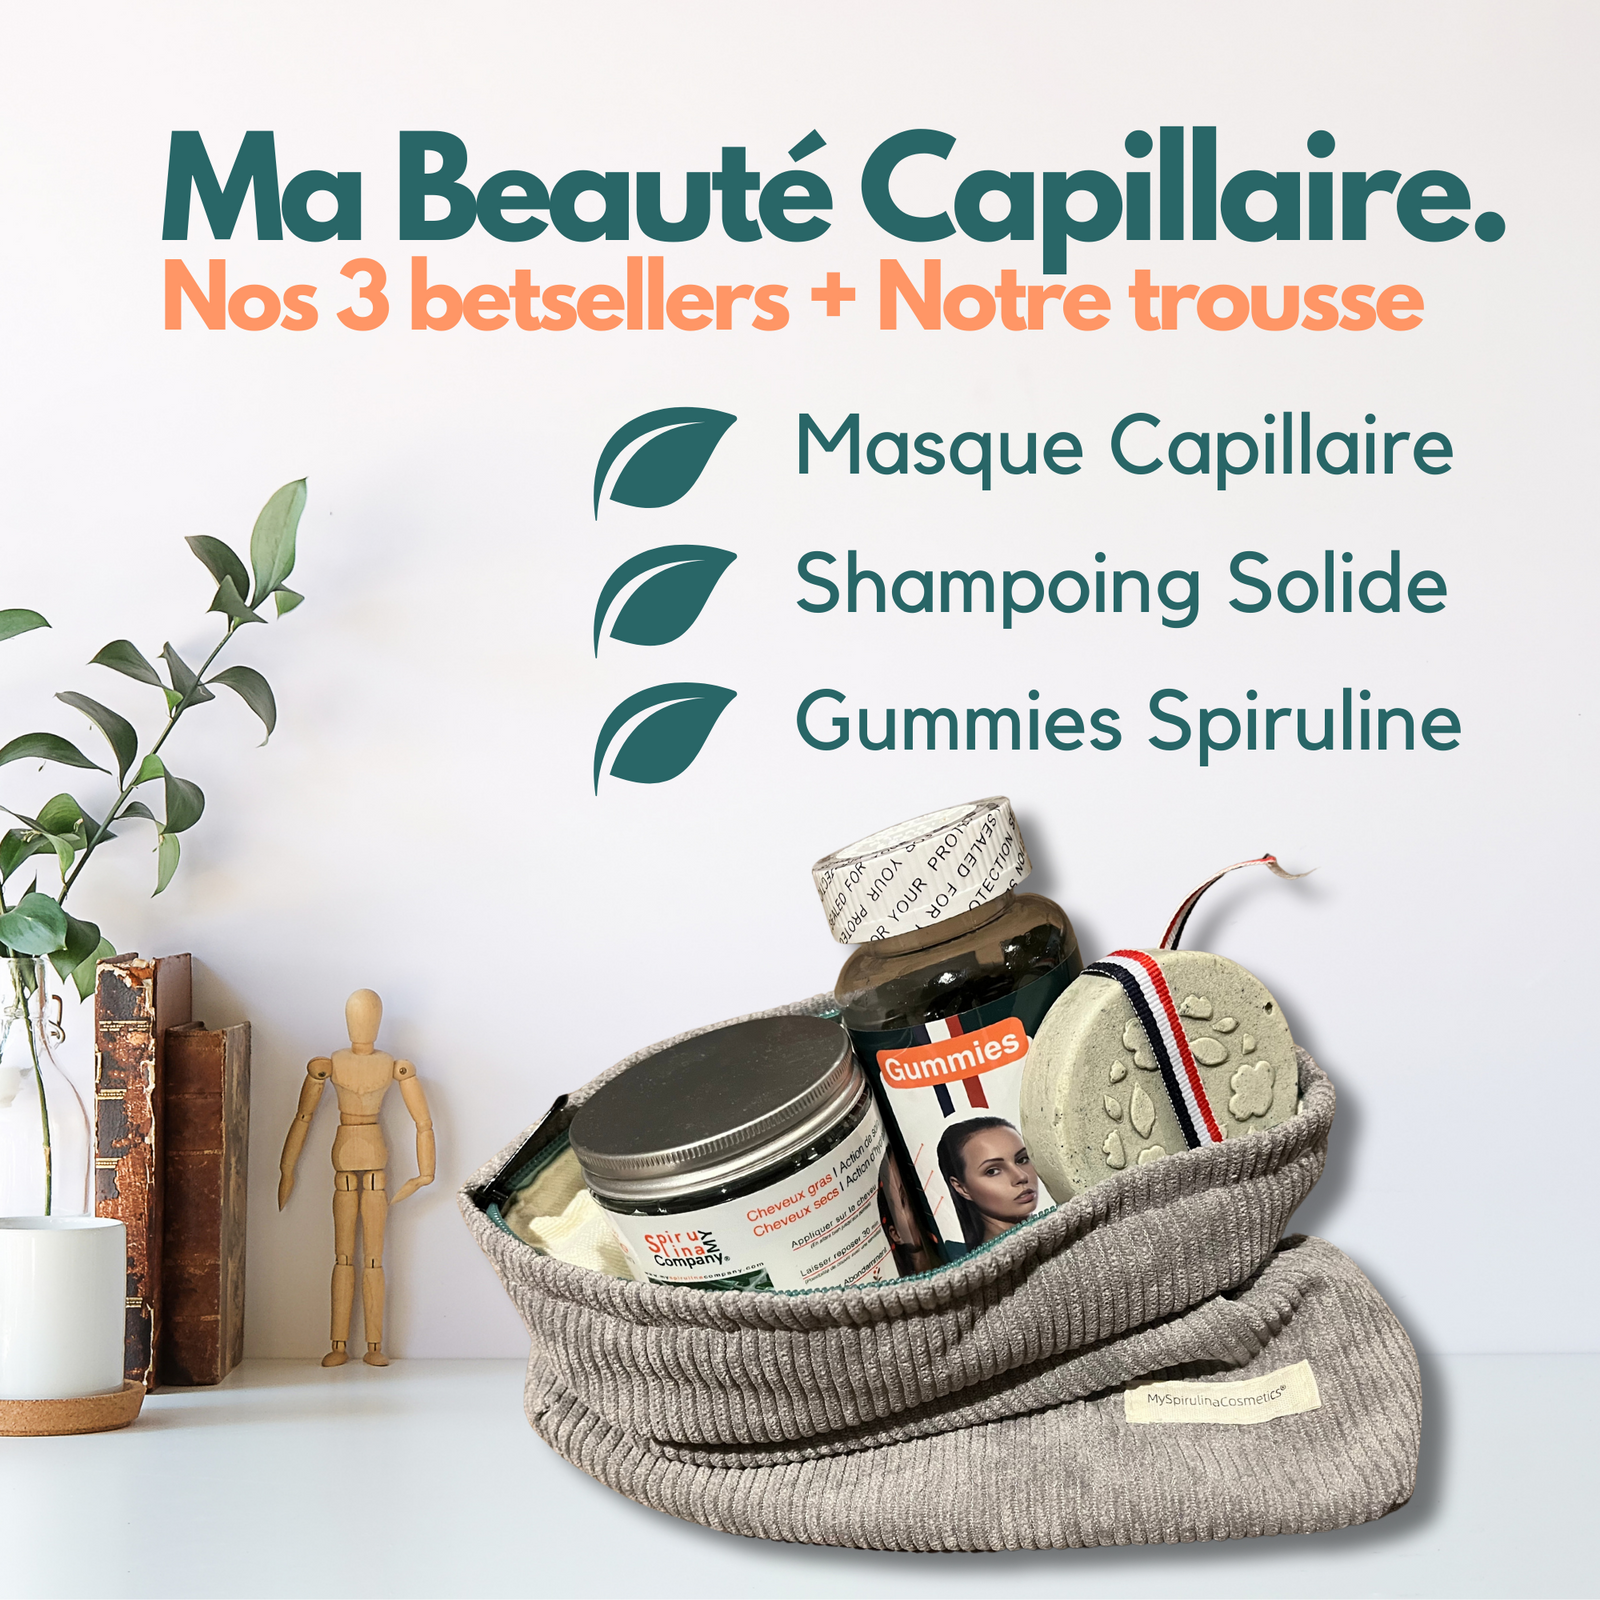 MySpirulinaCompany® - Hair beauty kit - 1 hair mask - 2 jars of gummies - 1 solid shampoo - 1 kit included